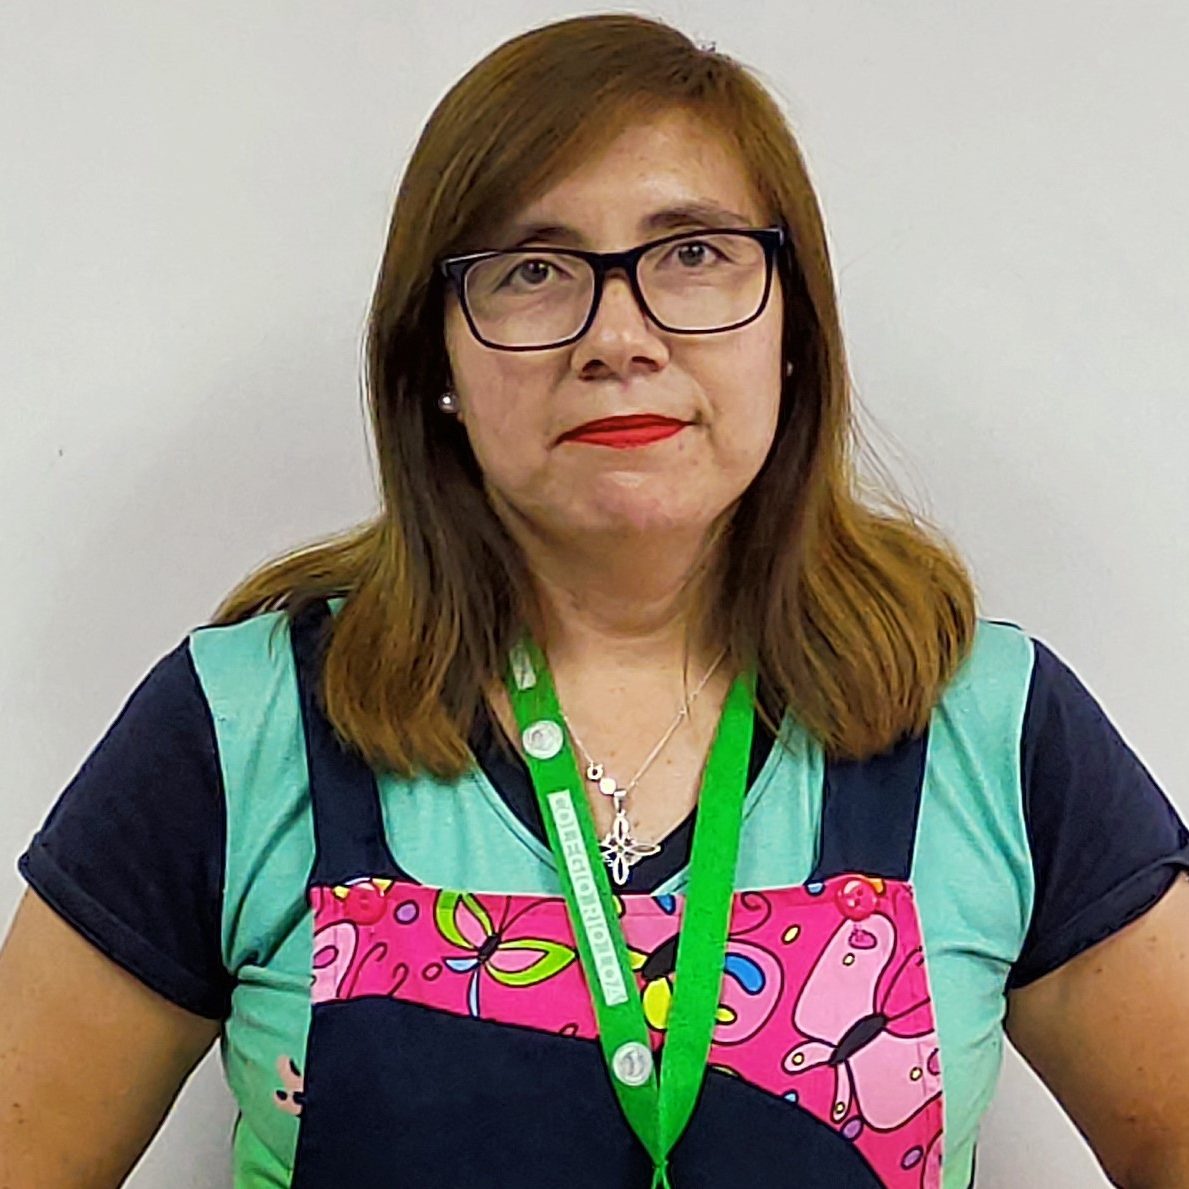 Asistente de Aula - Hilda Escalona